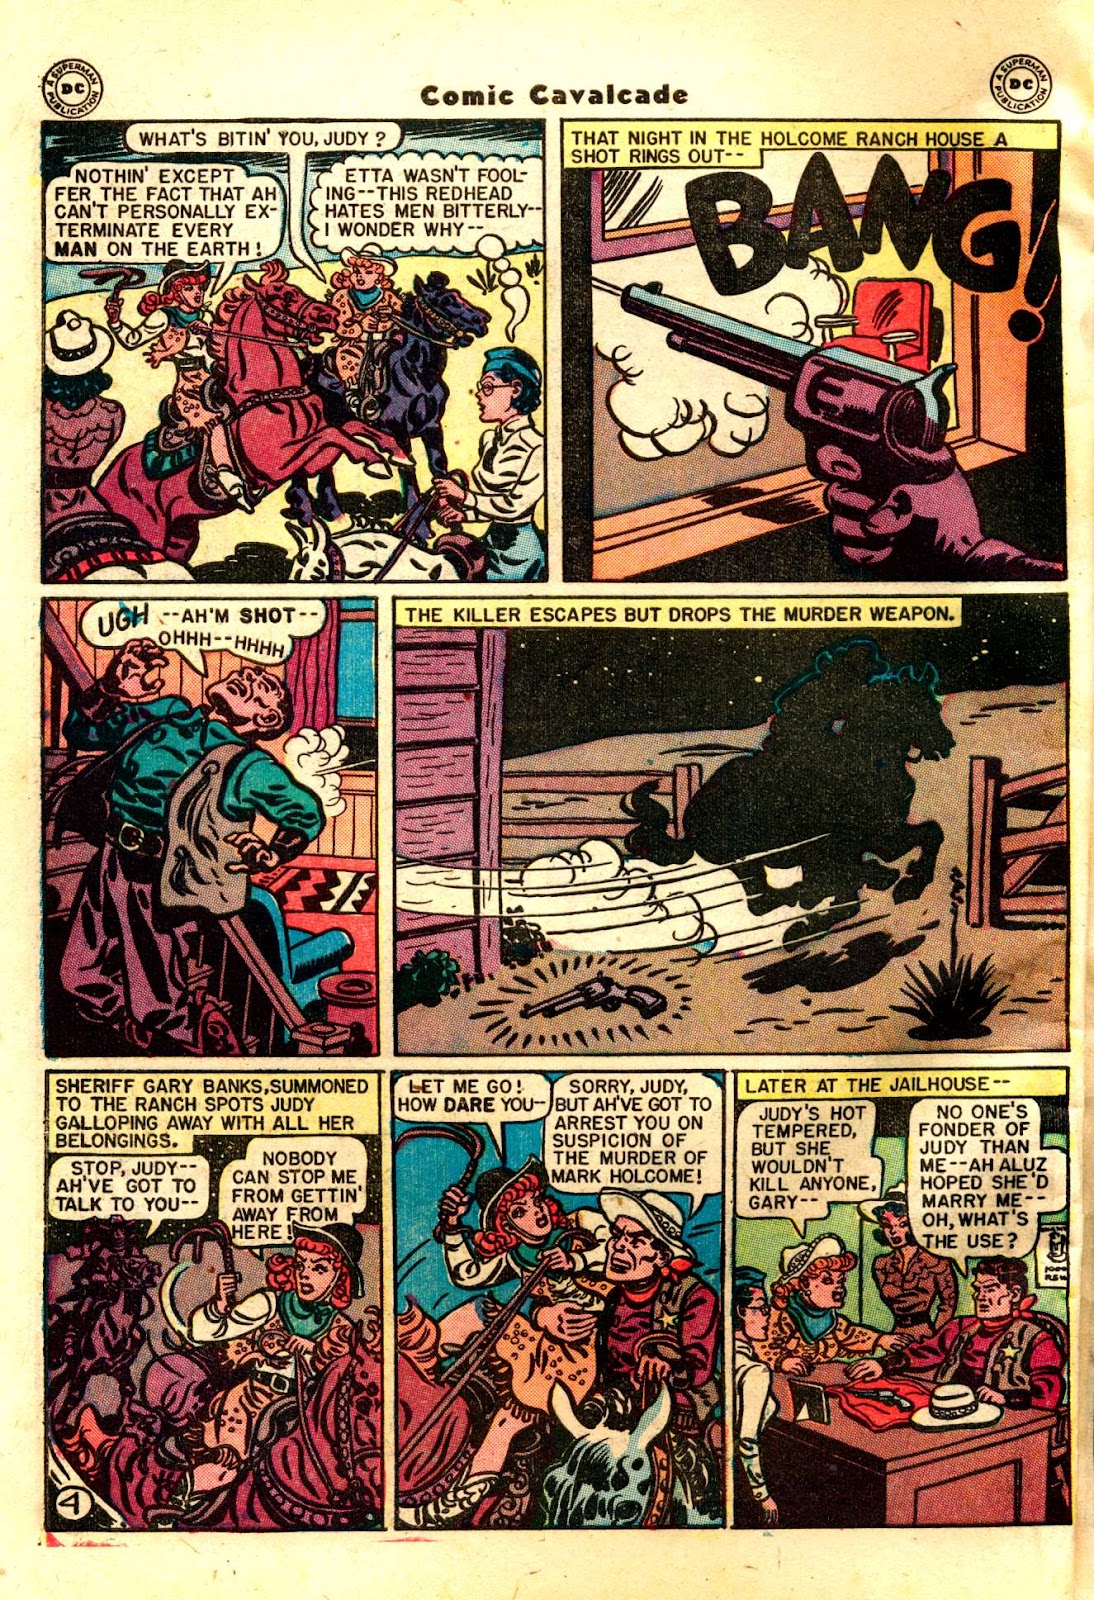 Comic Cavalcade issue 24 - Page 6